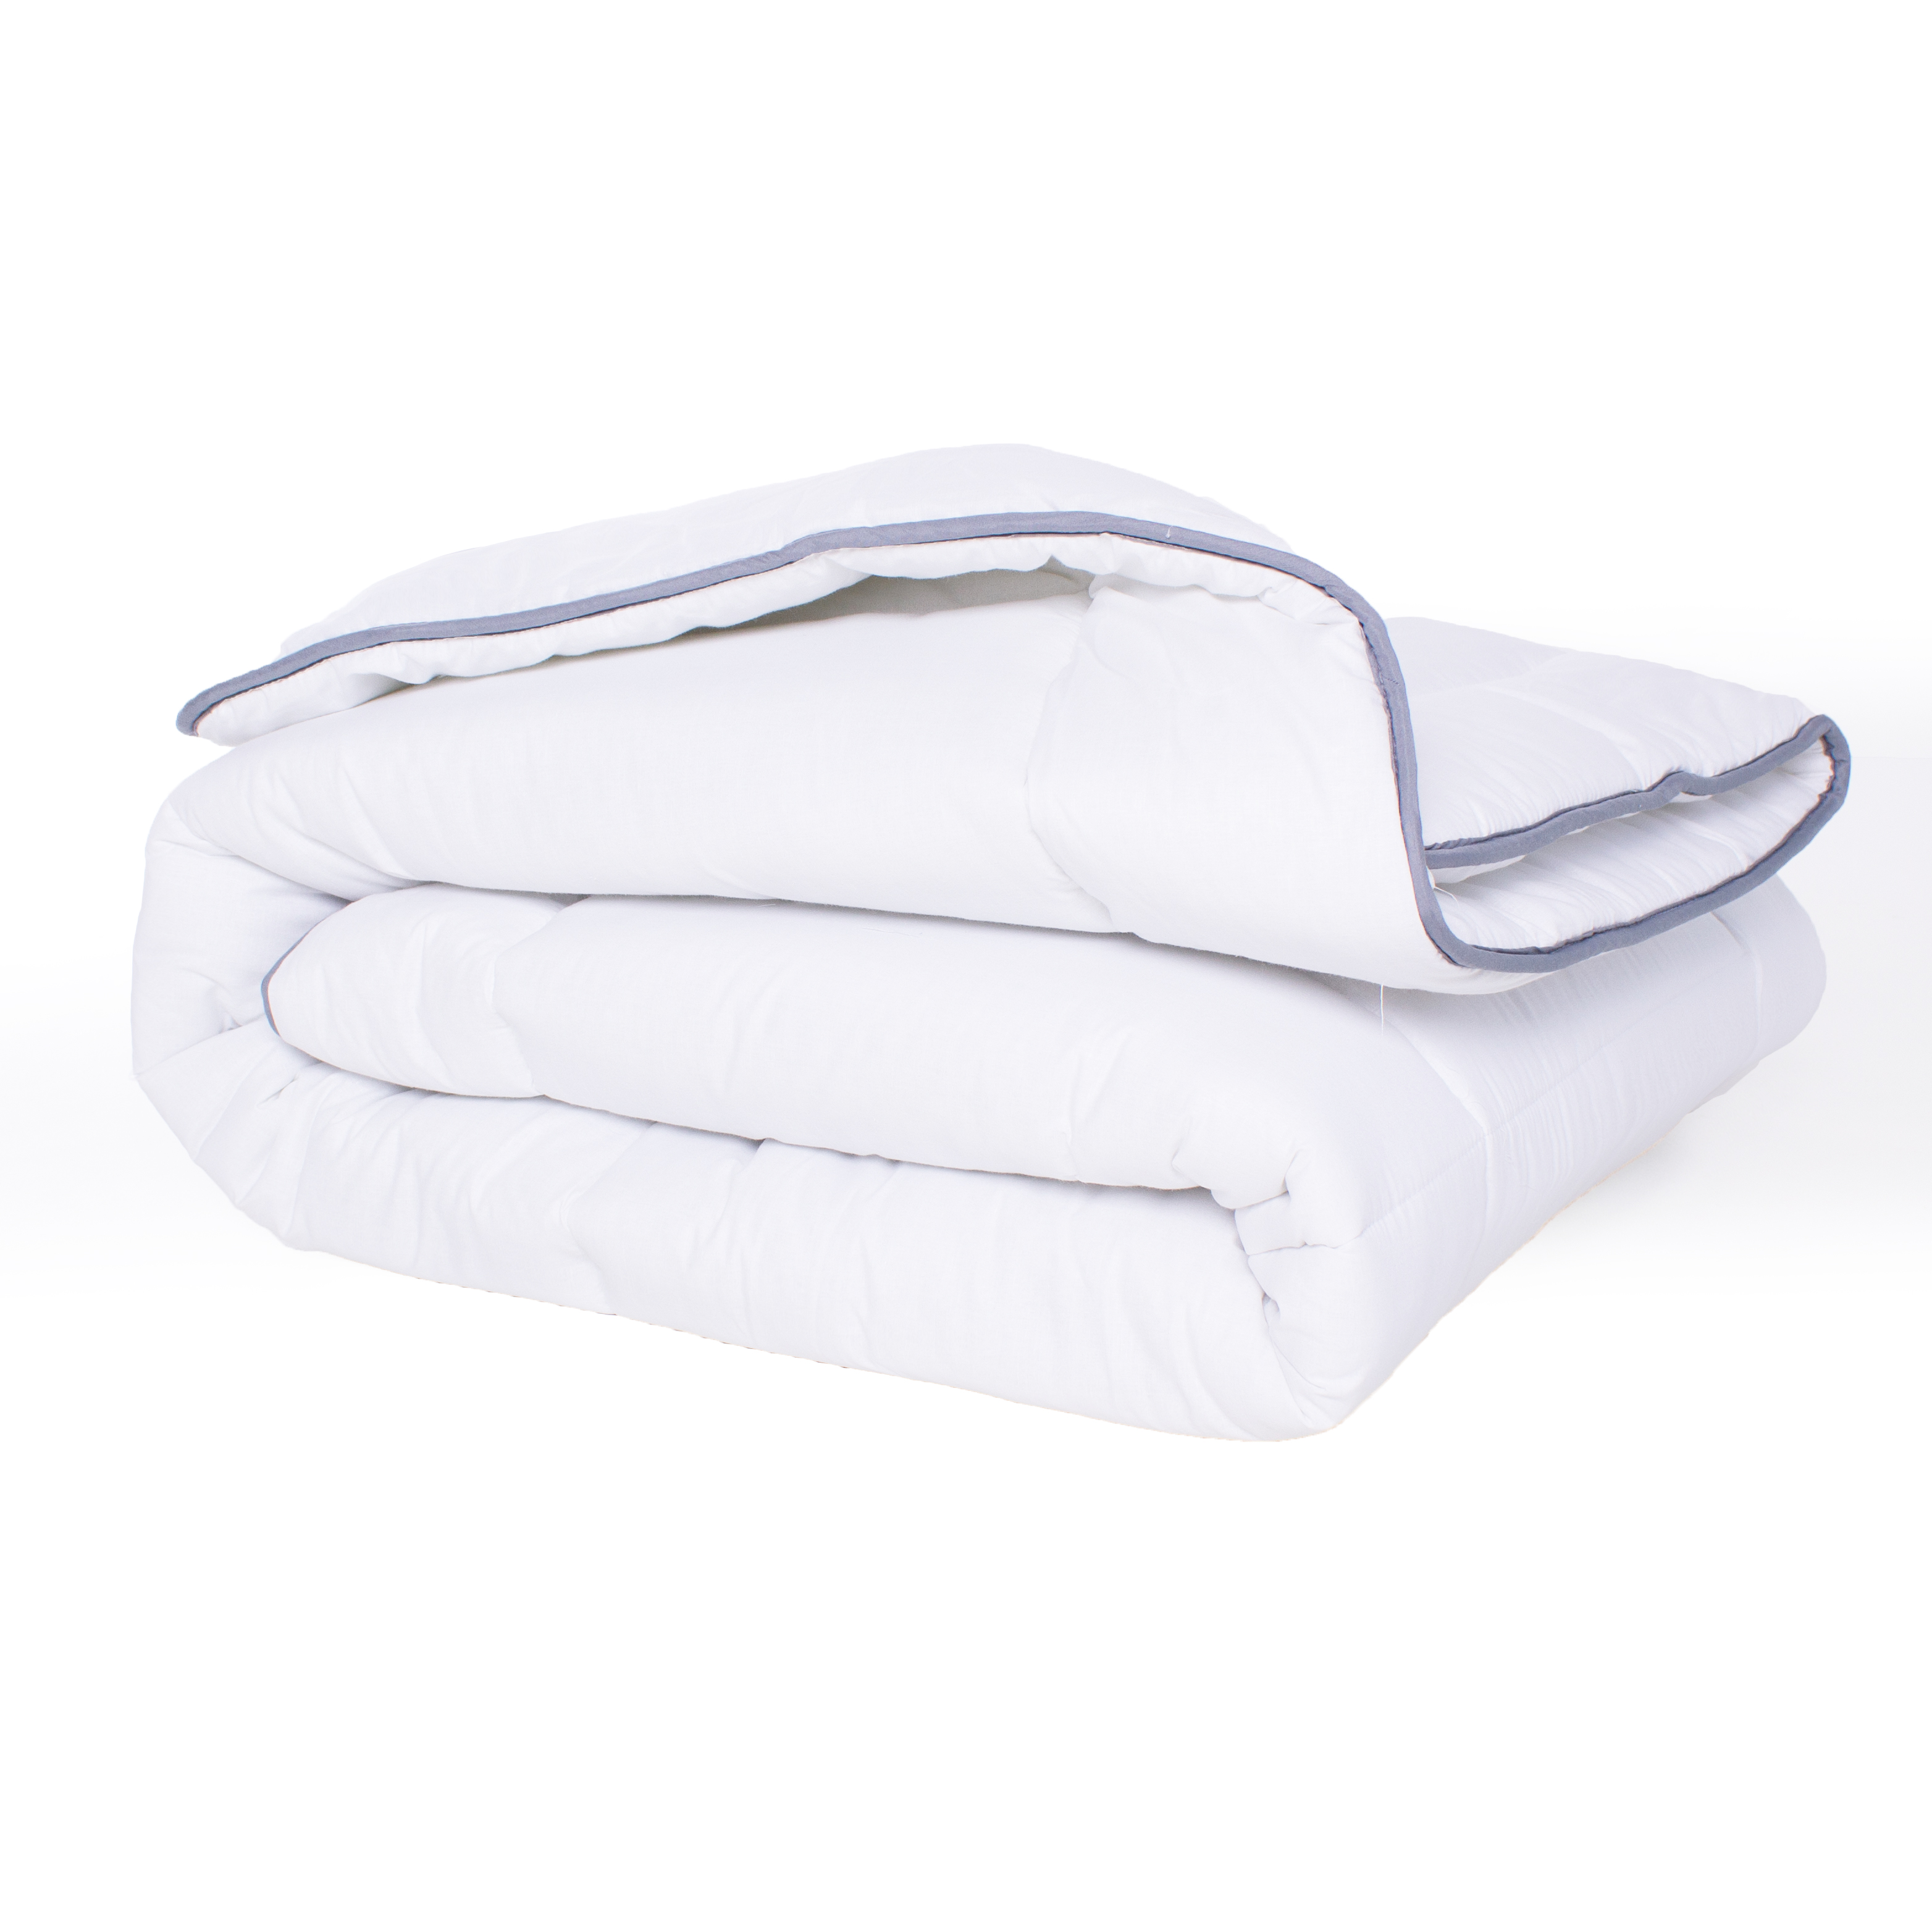 Одеяло шерстяное MirSon Royal №026, демисезонное, 110x140 см, белое - фото 2